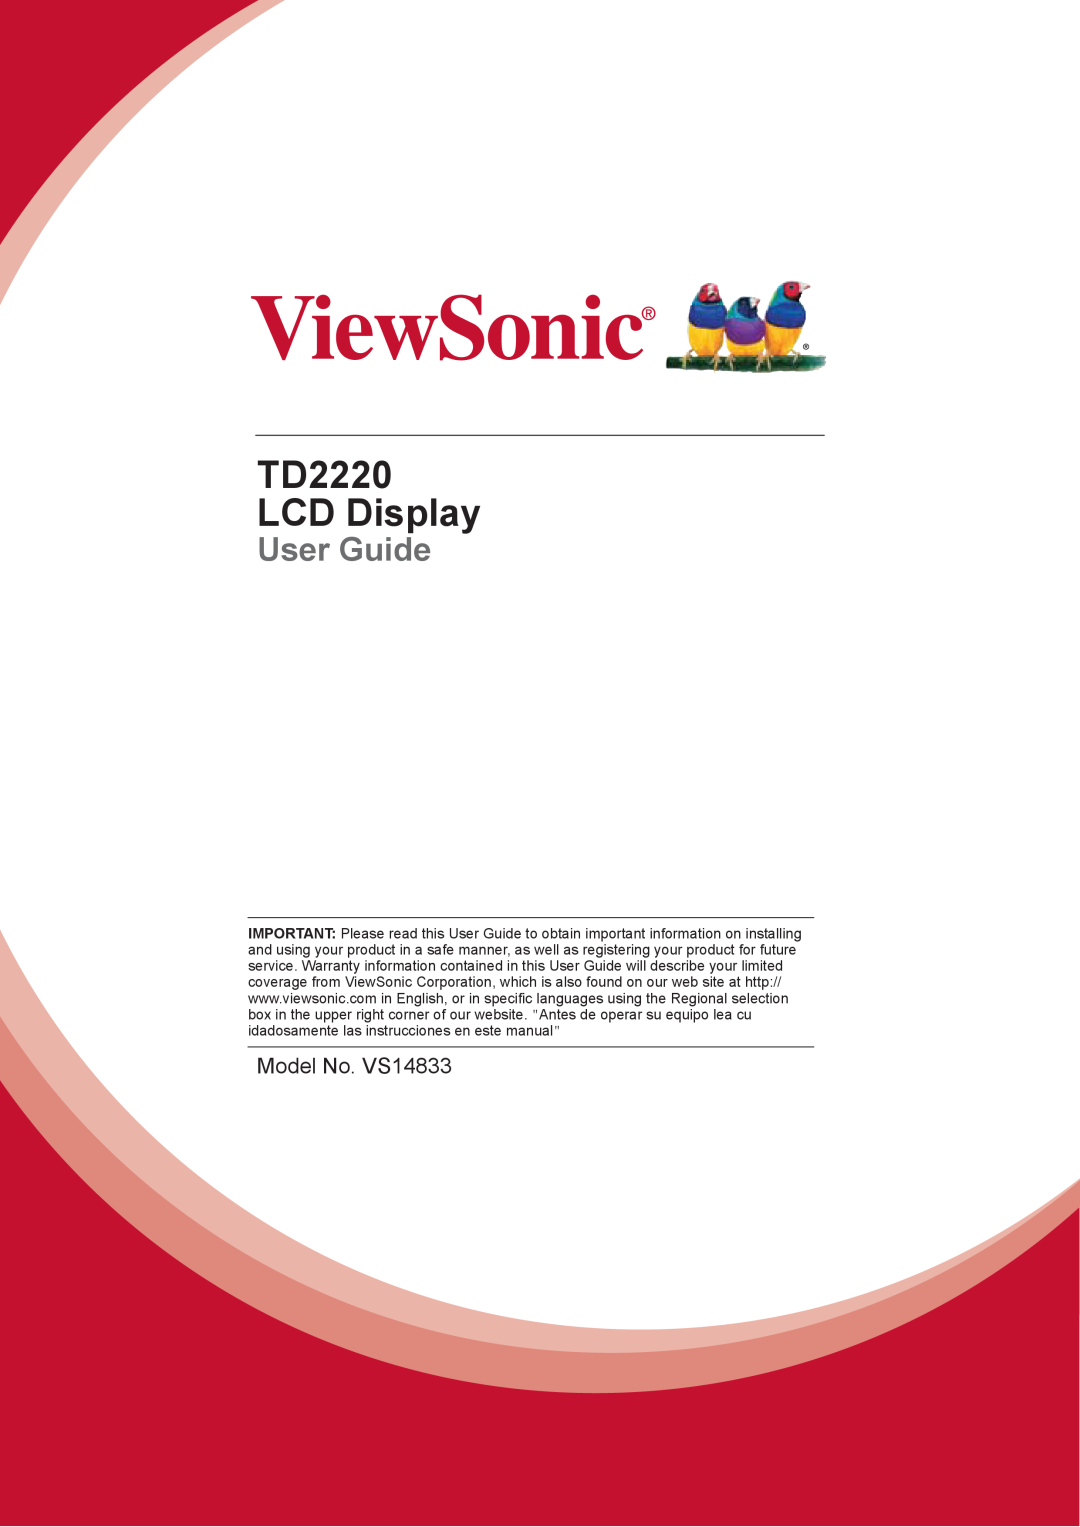 ViewSonic warranty TD2220 LCD Display, User Guide 